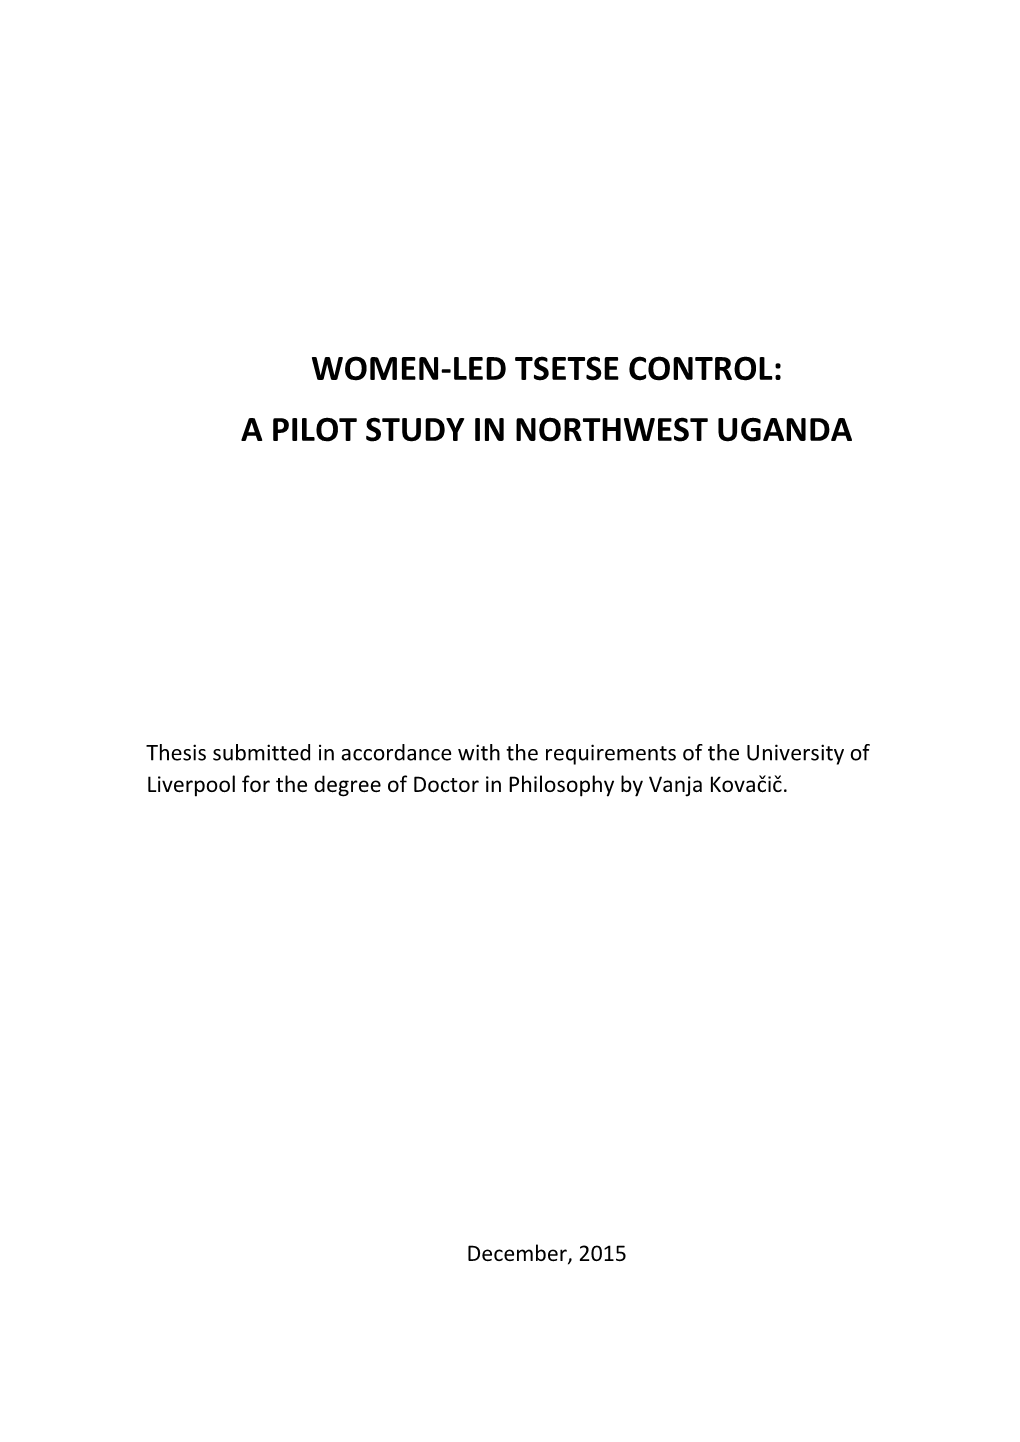 A Pilot Study in Northwest Uganda